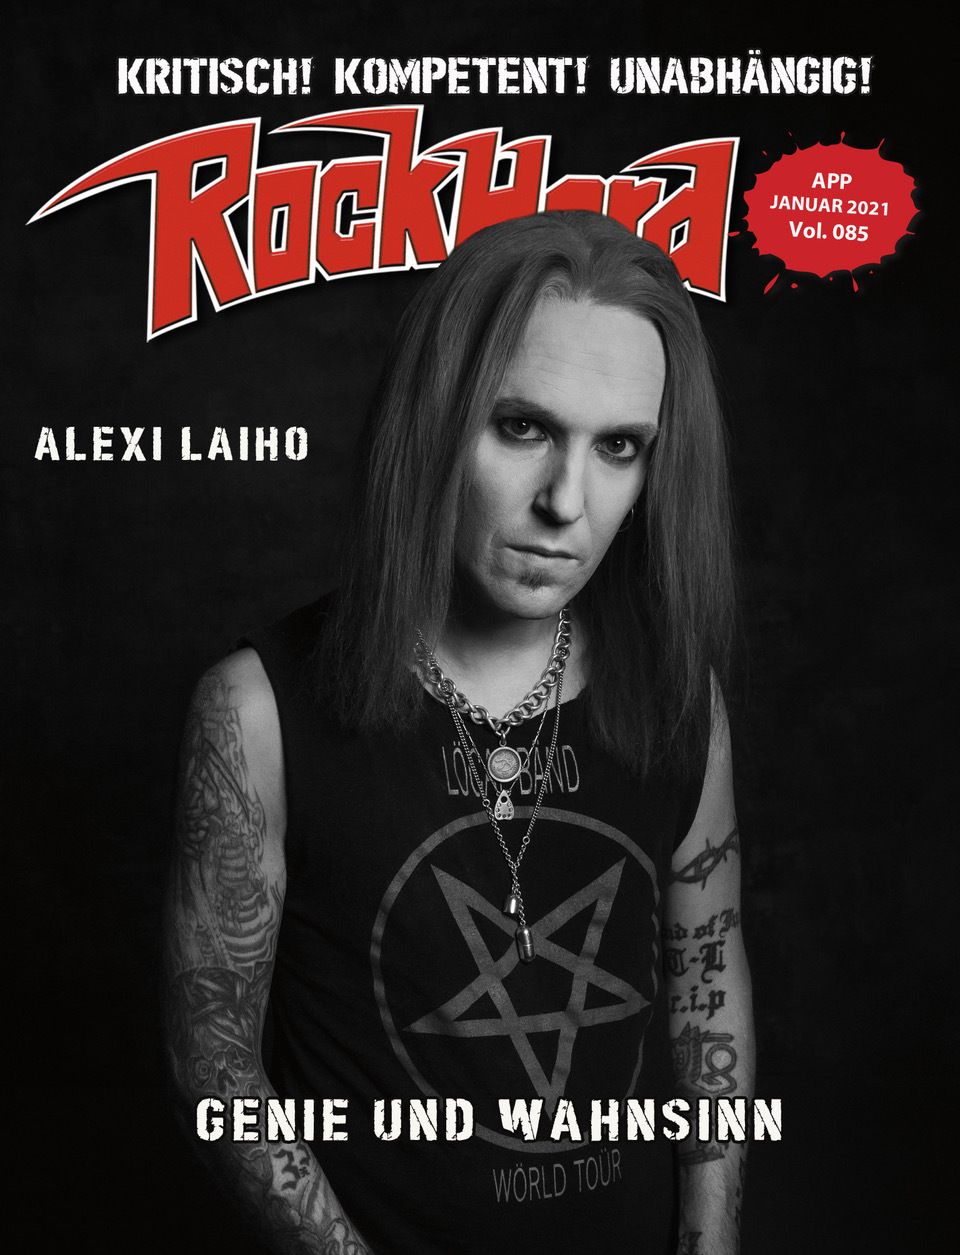 Rock-Hard-App Vol. 85 ist da!